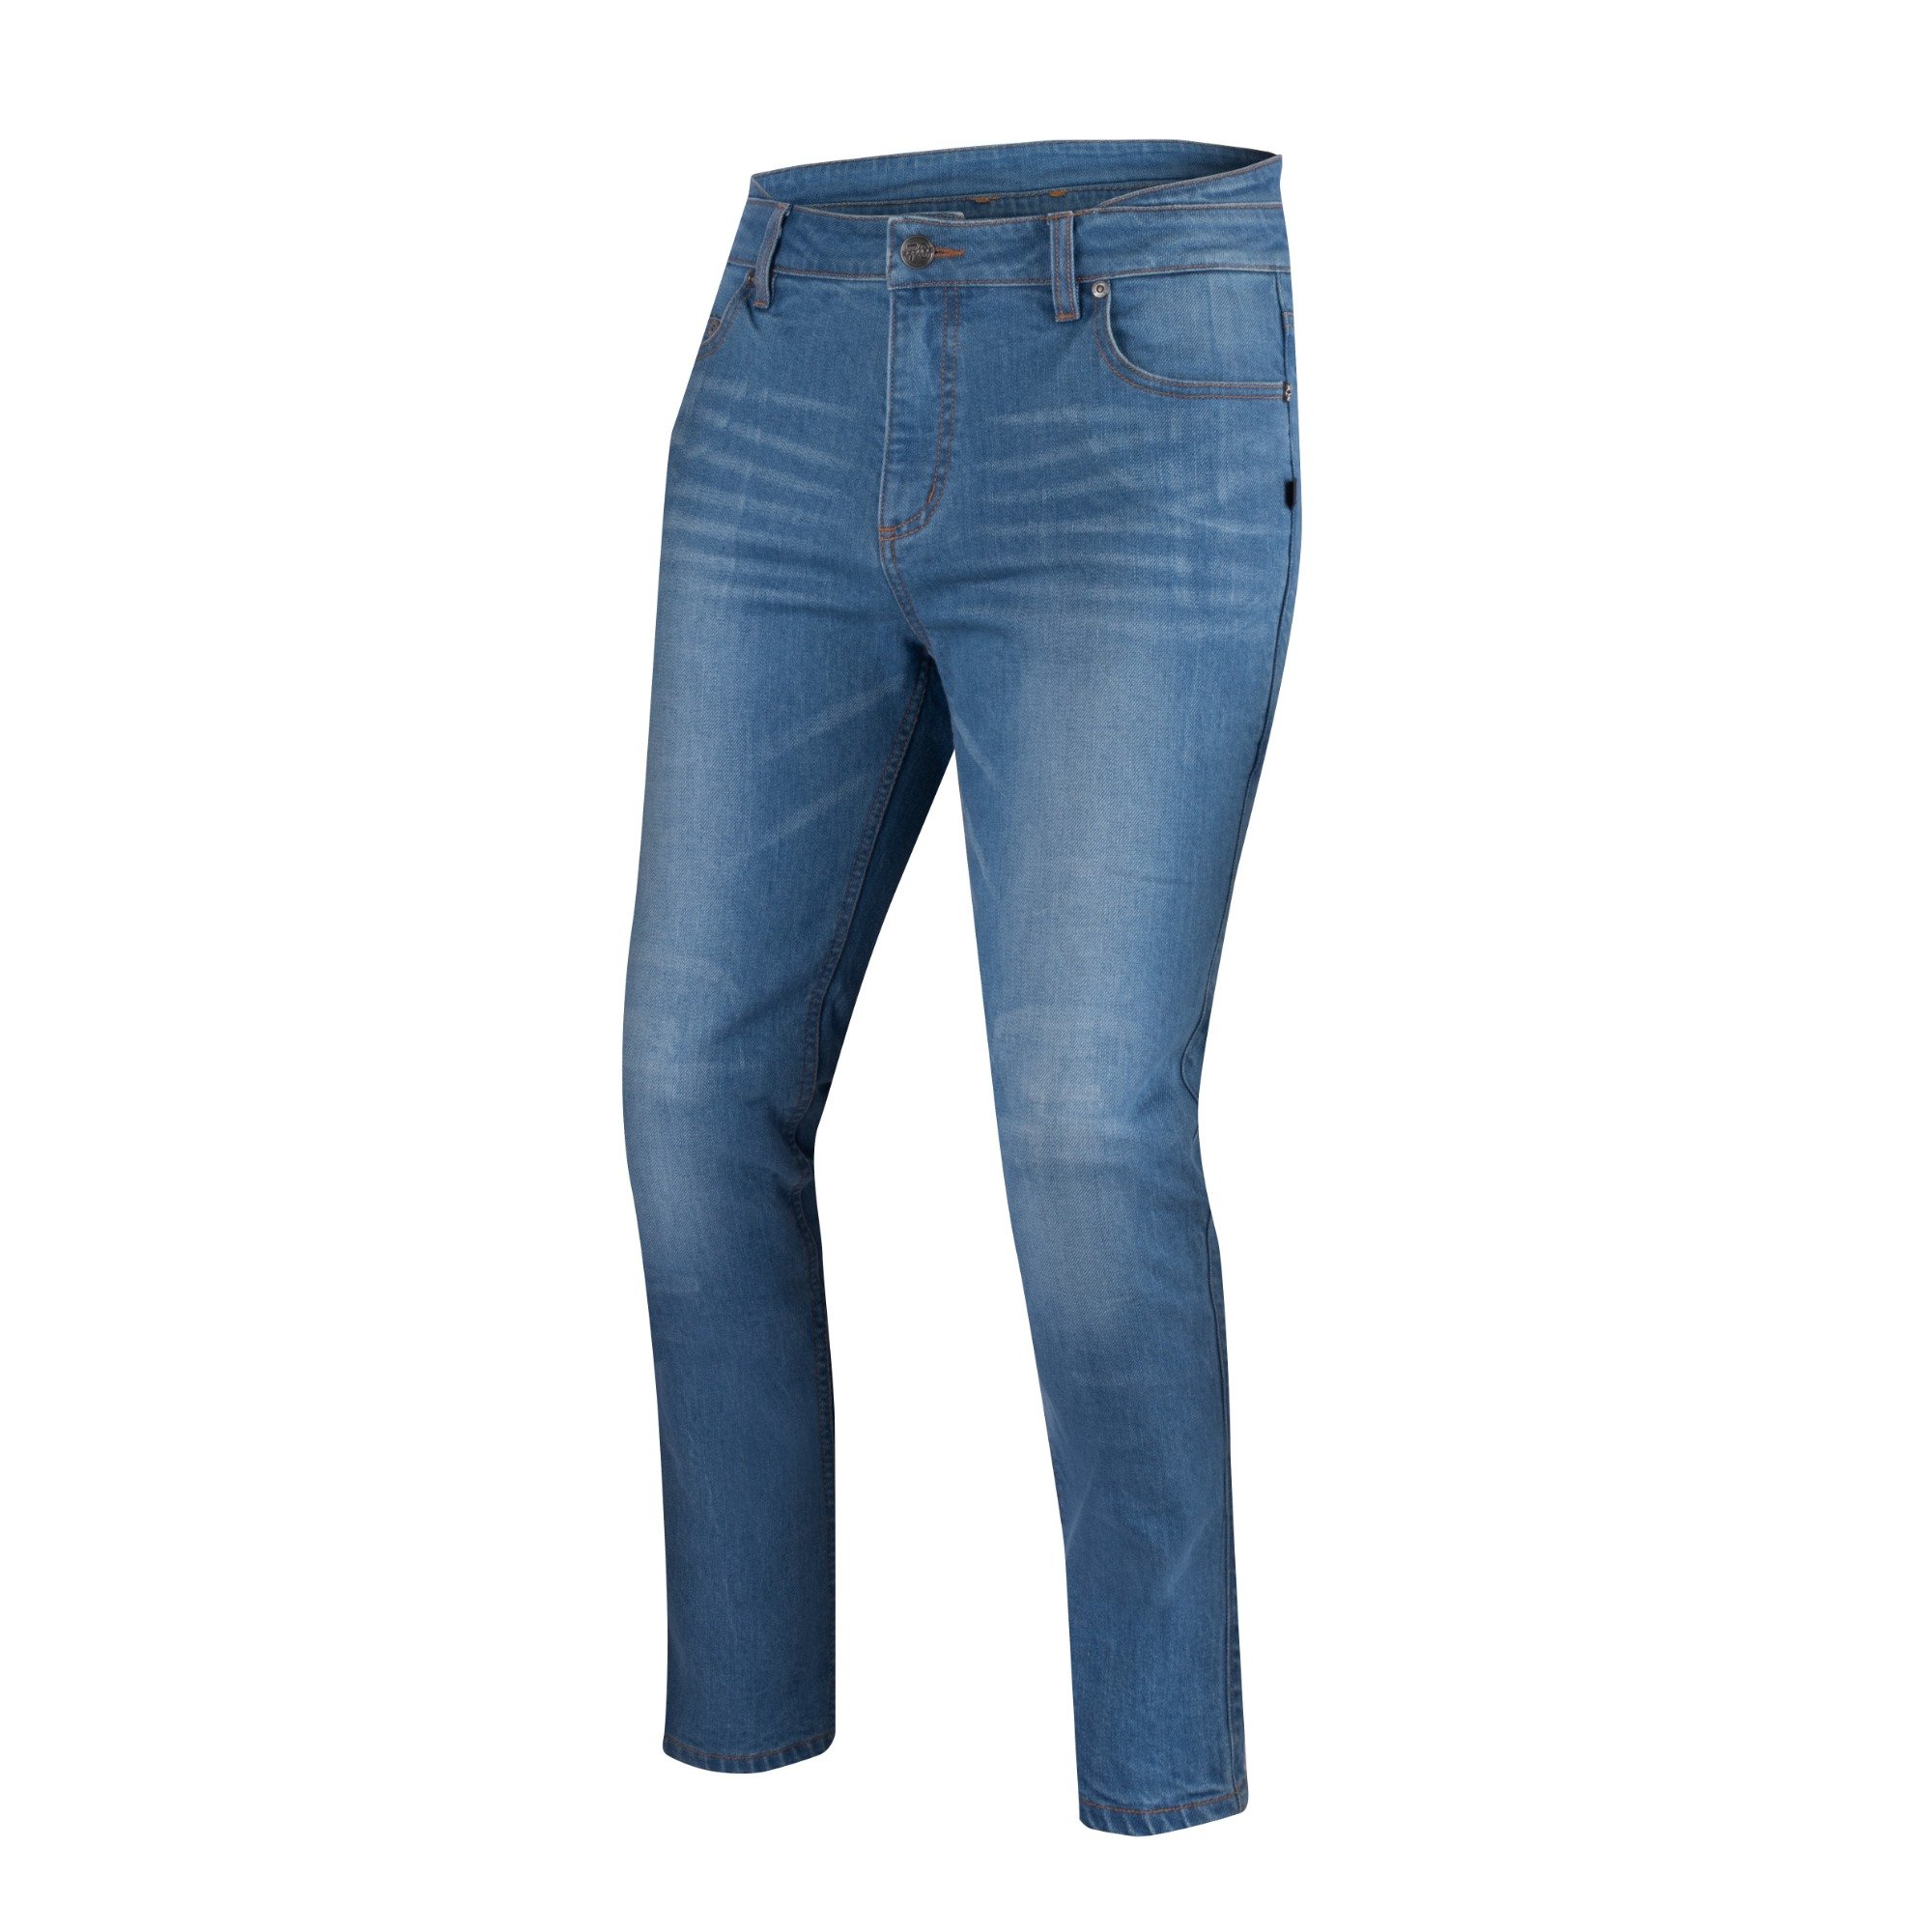 Image of Segura Trousers Rosco Blue Size L ID 3660815168066